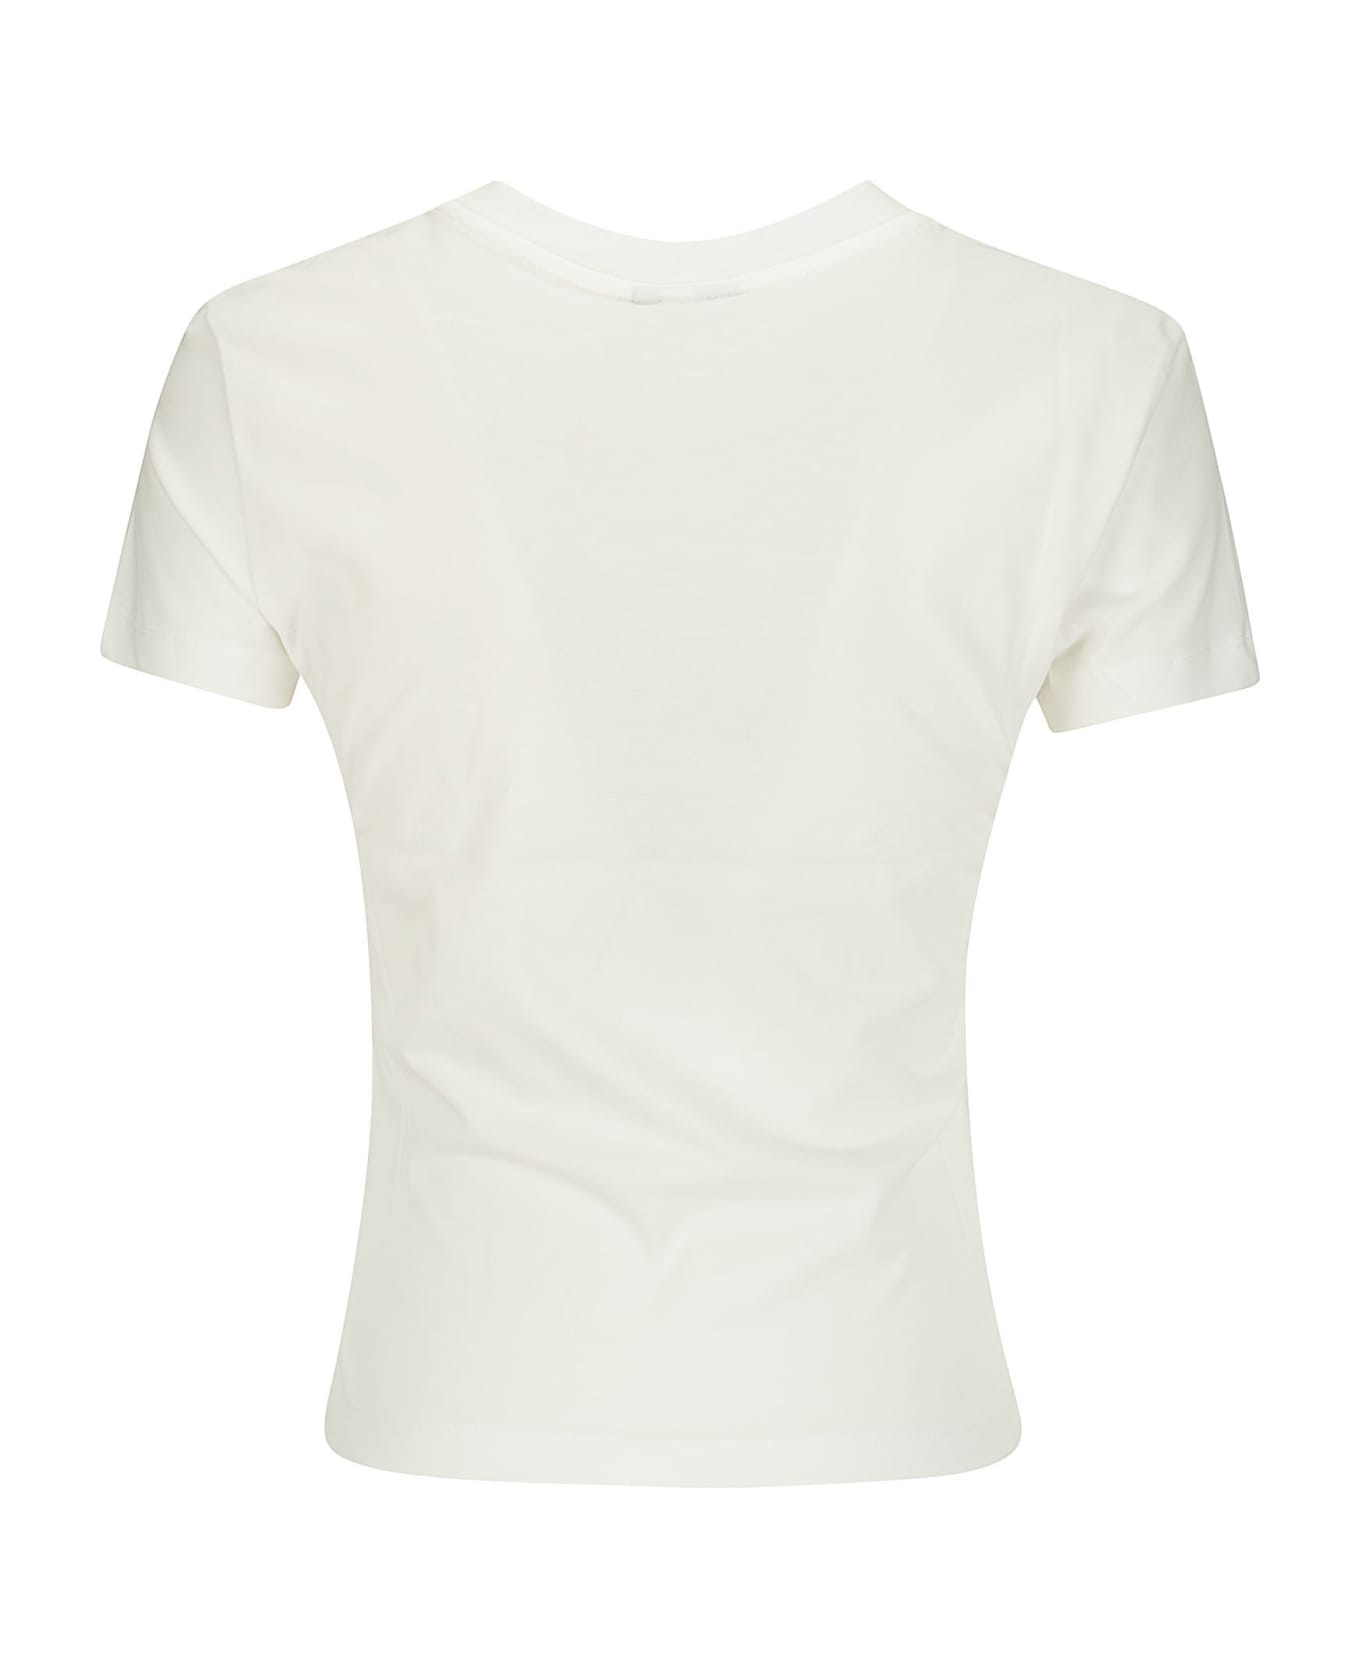 Vaquera Women's Titty T-shirt - WHITE